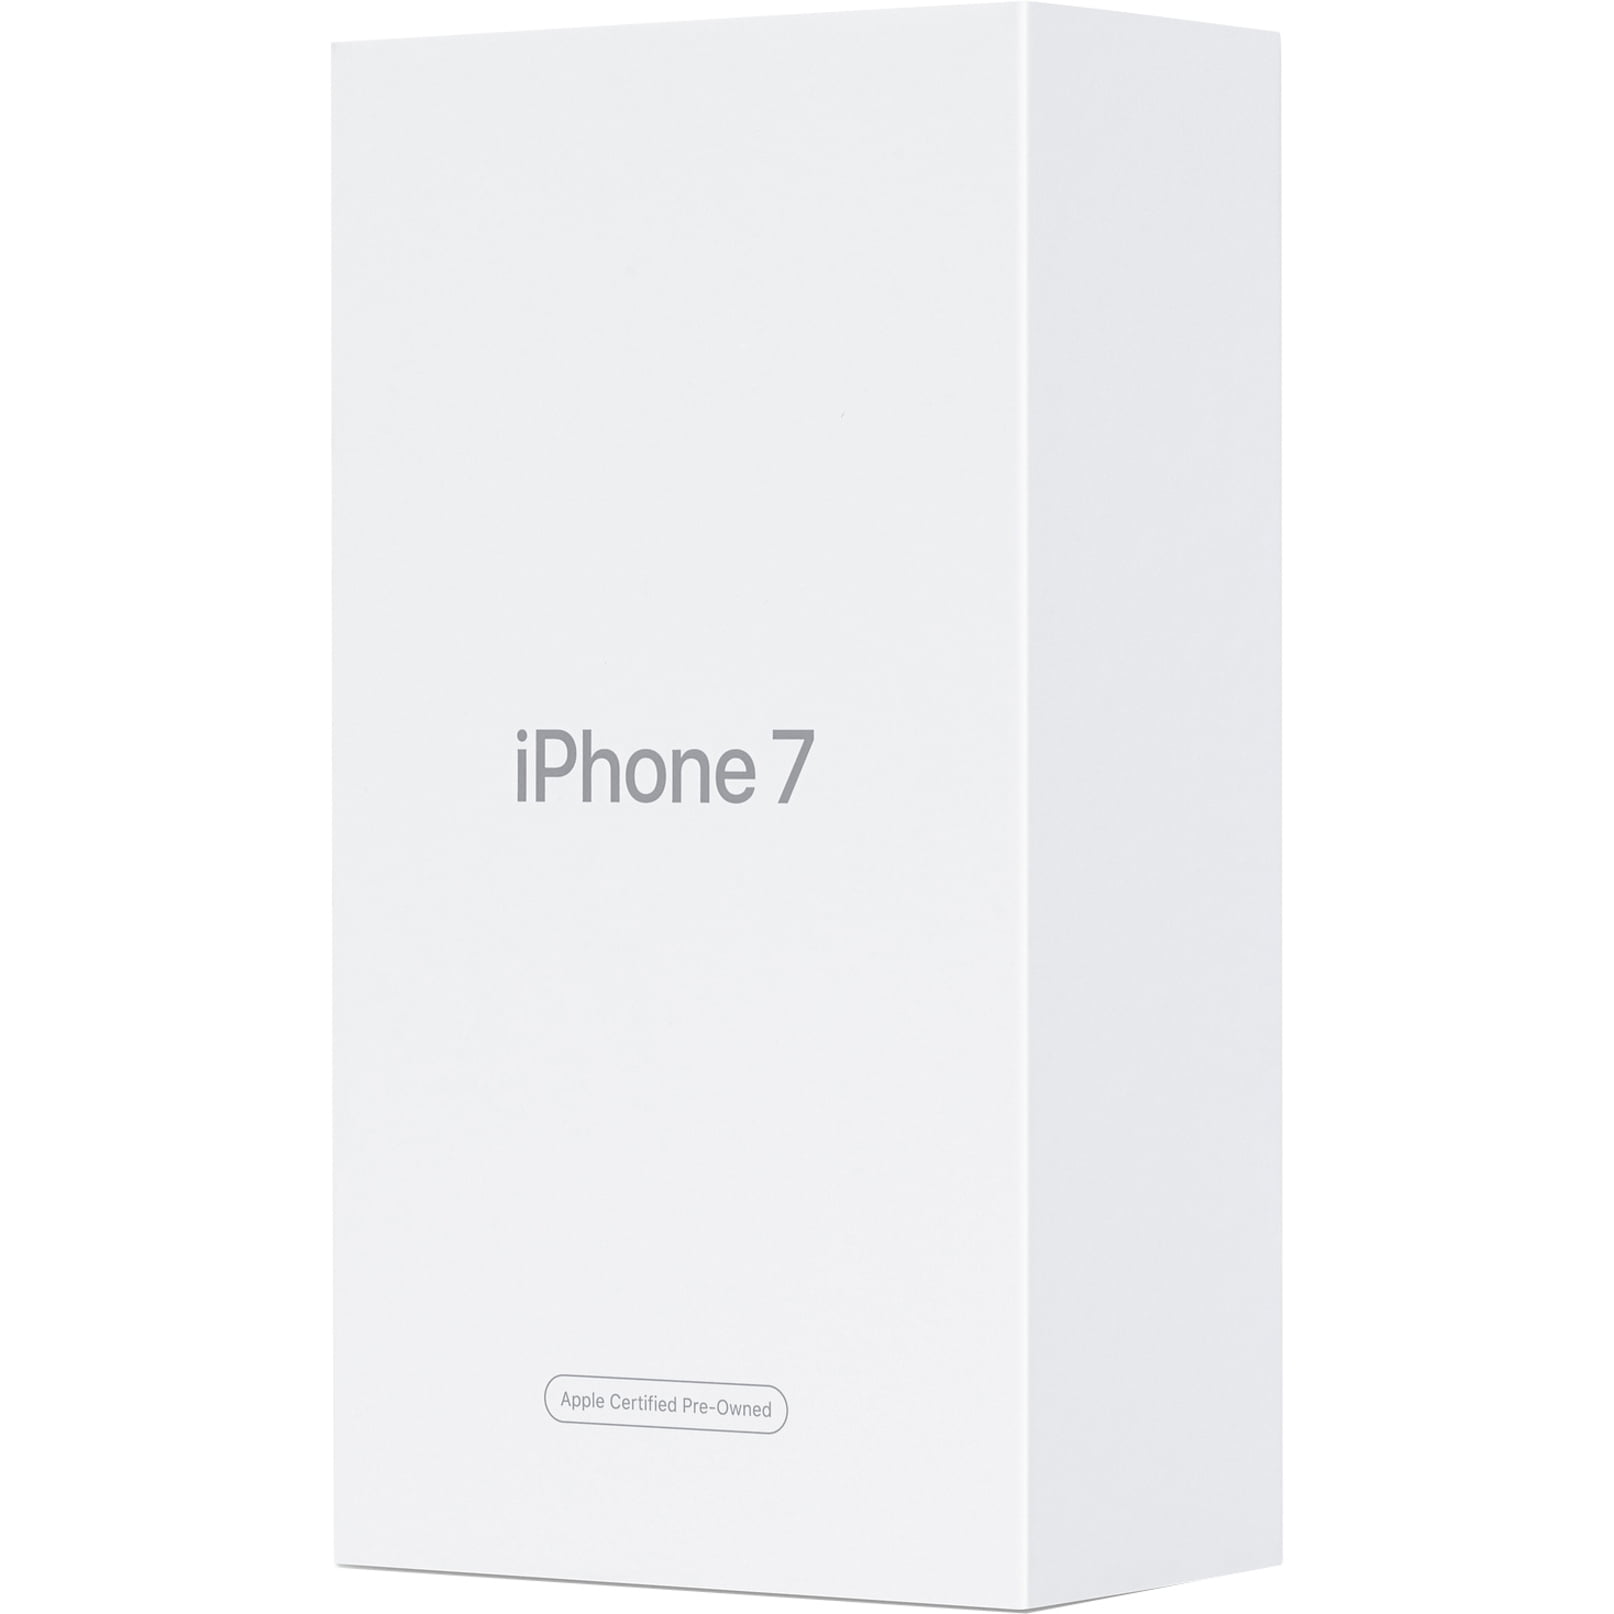 Restored Apple iPhone 7 256GB, Black - Unlocked GSM (Refurbished